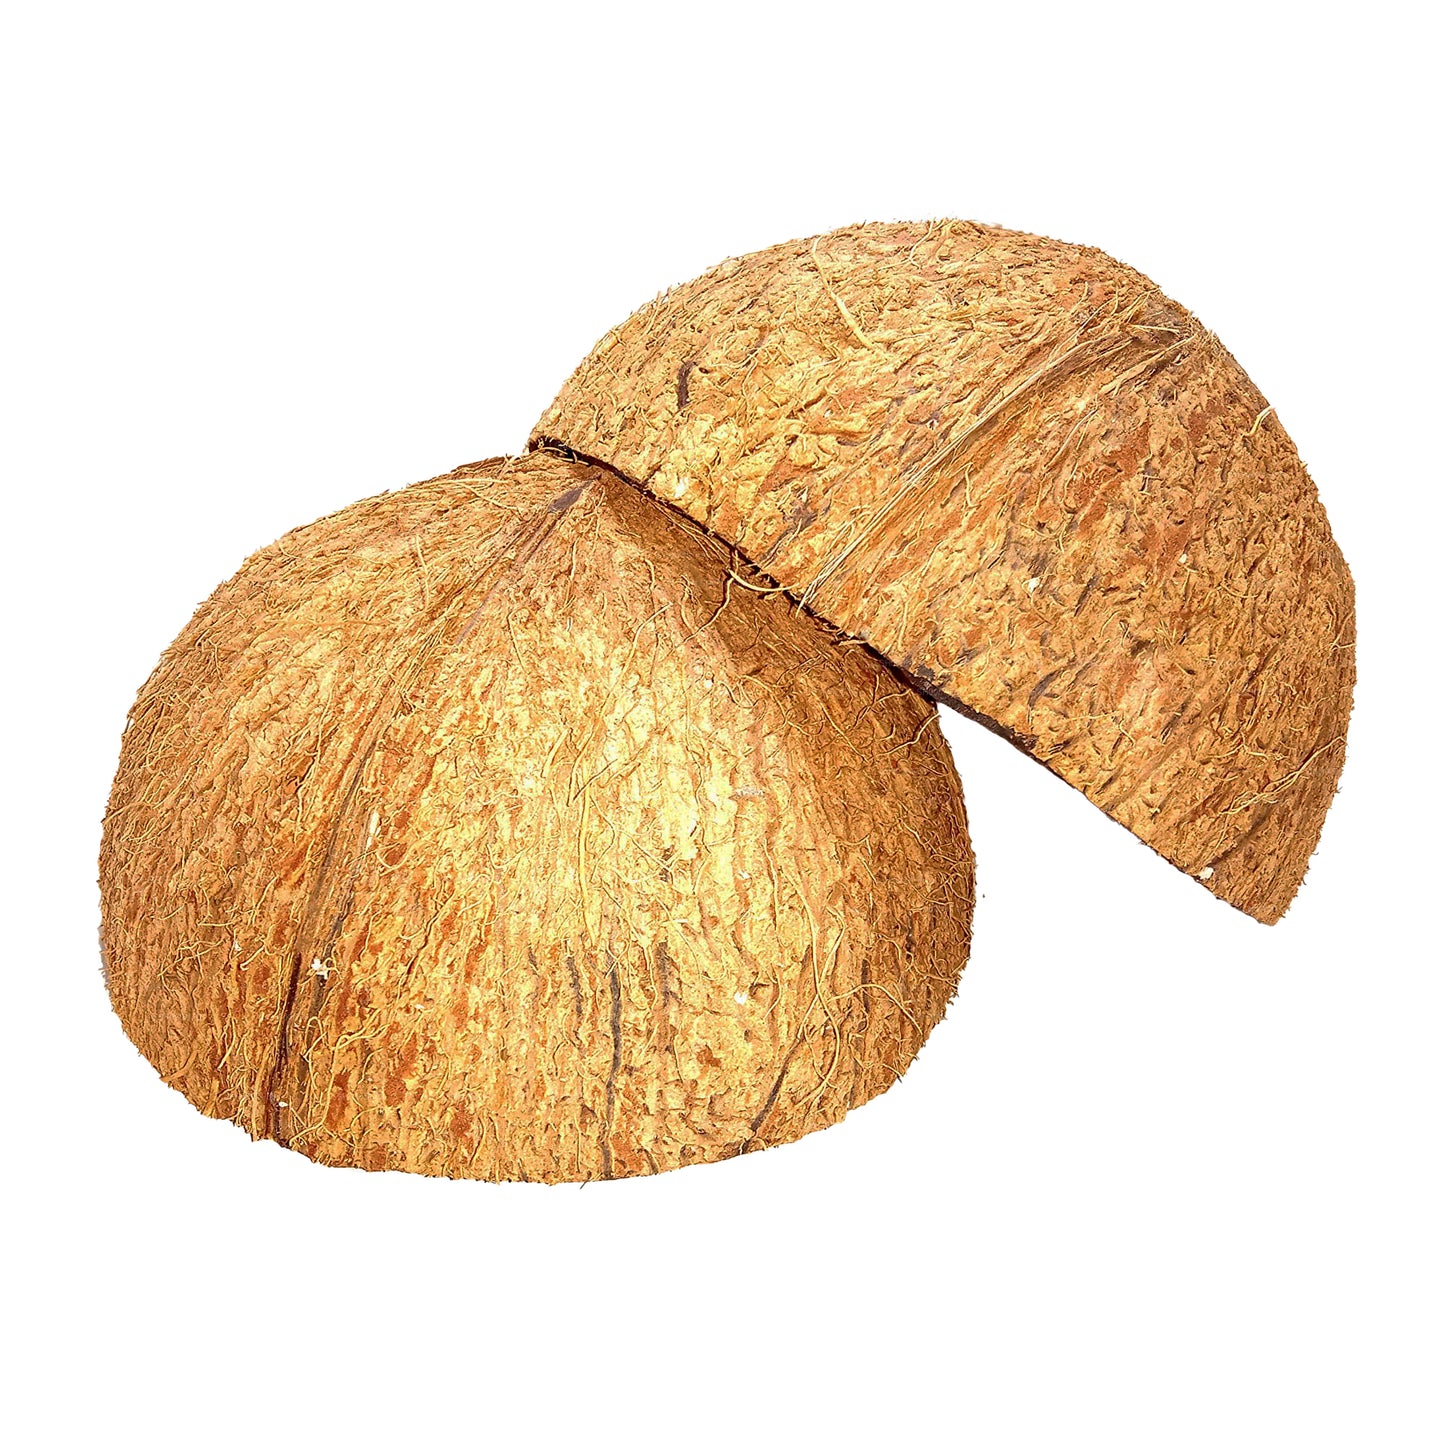 Coconut Shell Halves (2 stk)